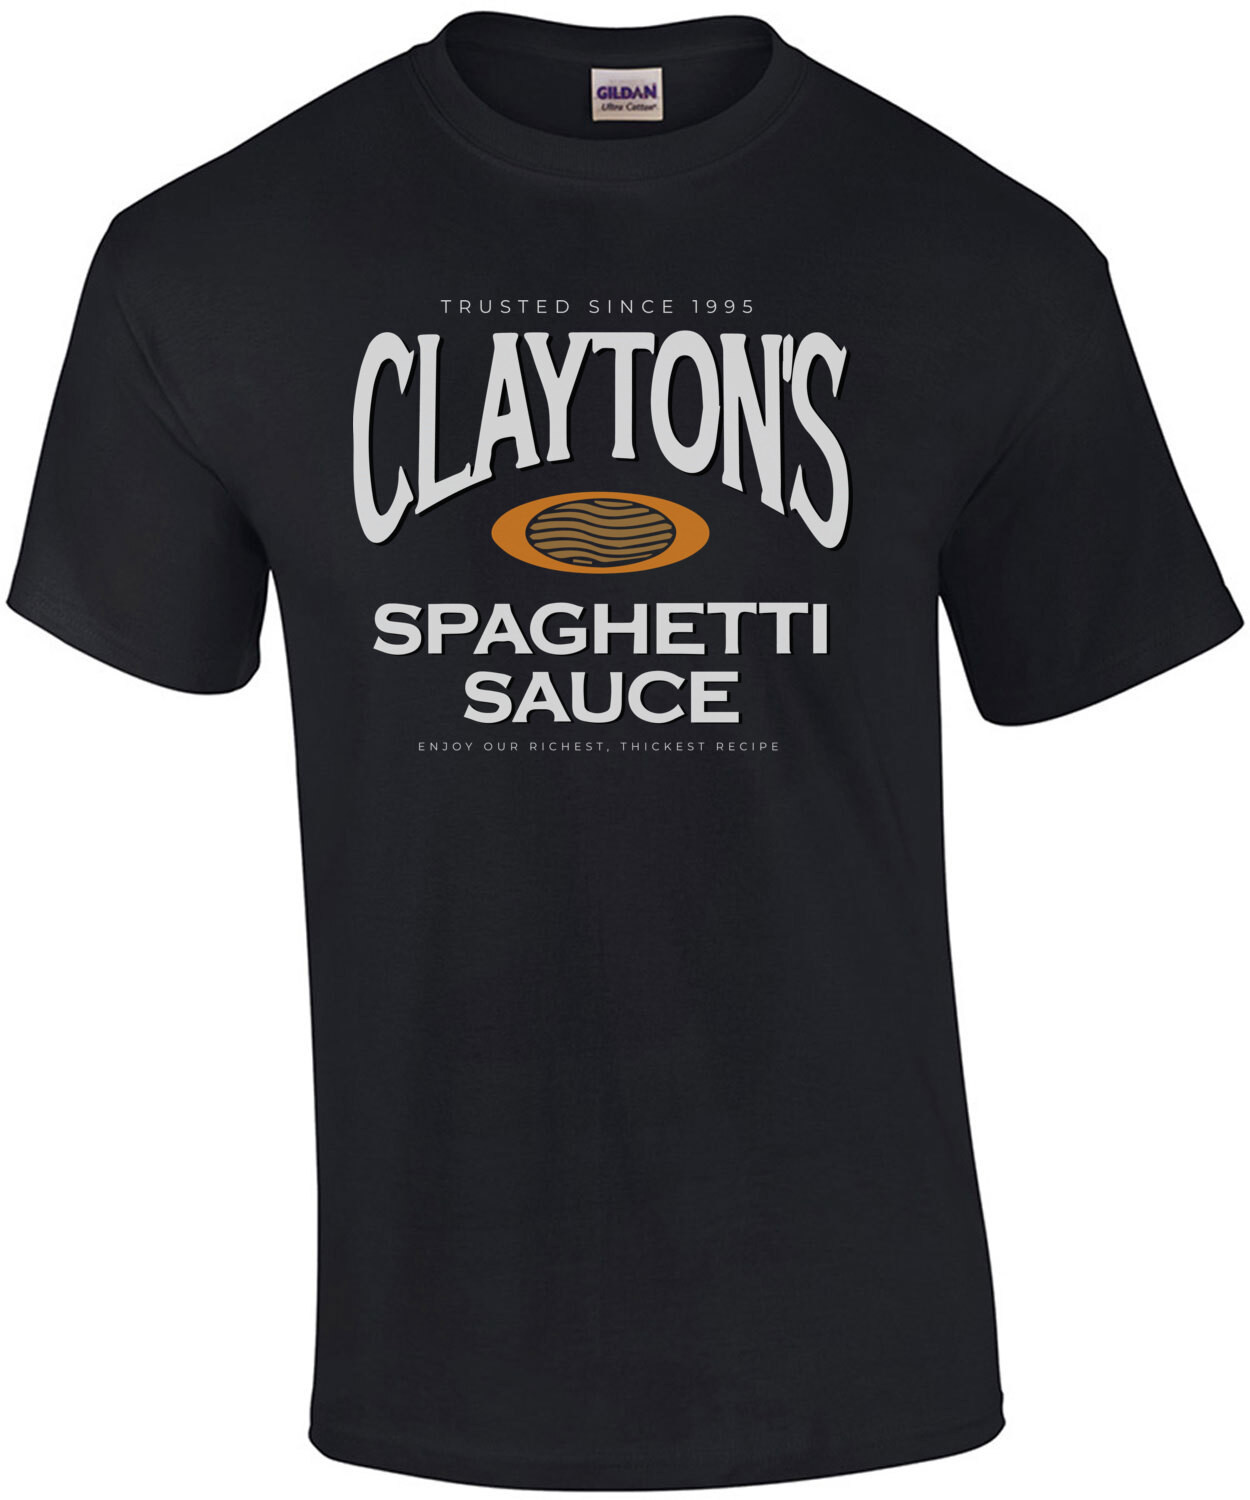 Clayton's Spaghetti Sauce - Se7en - 90's T-Shirt